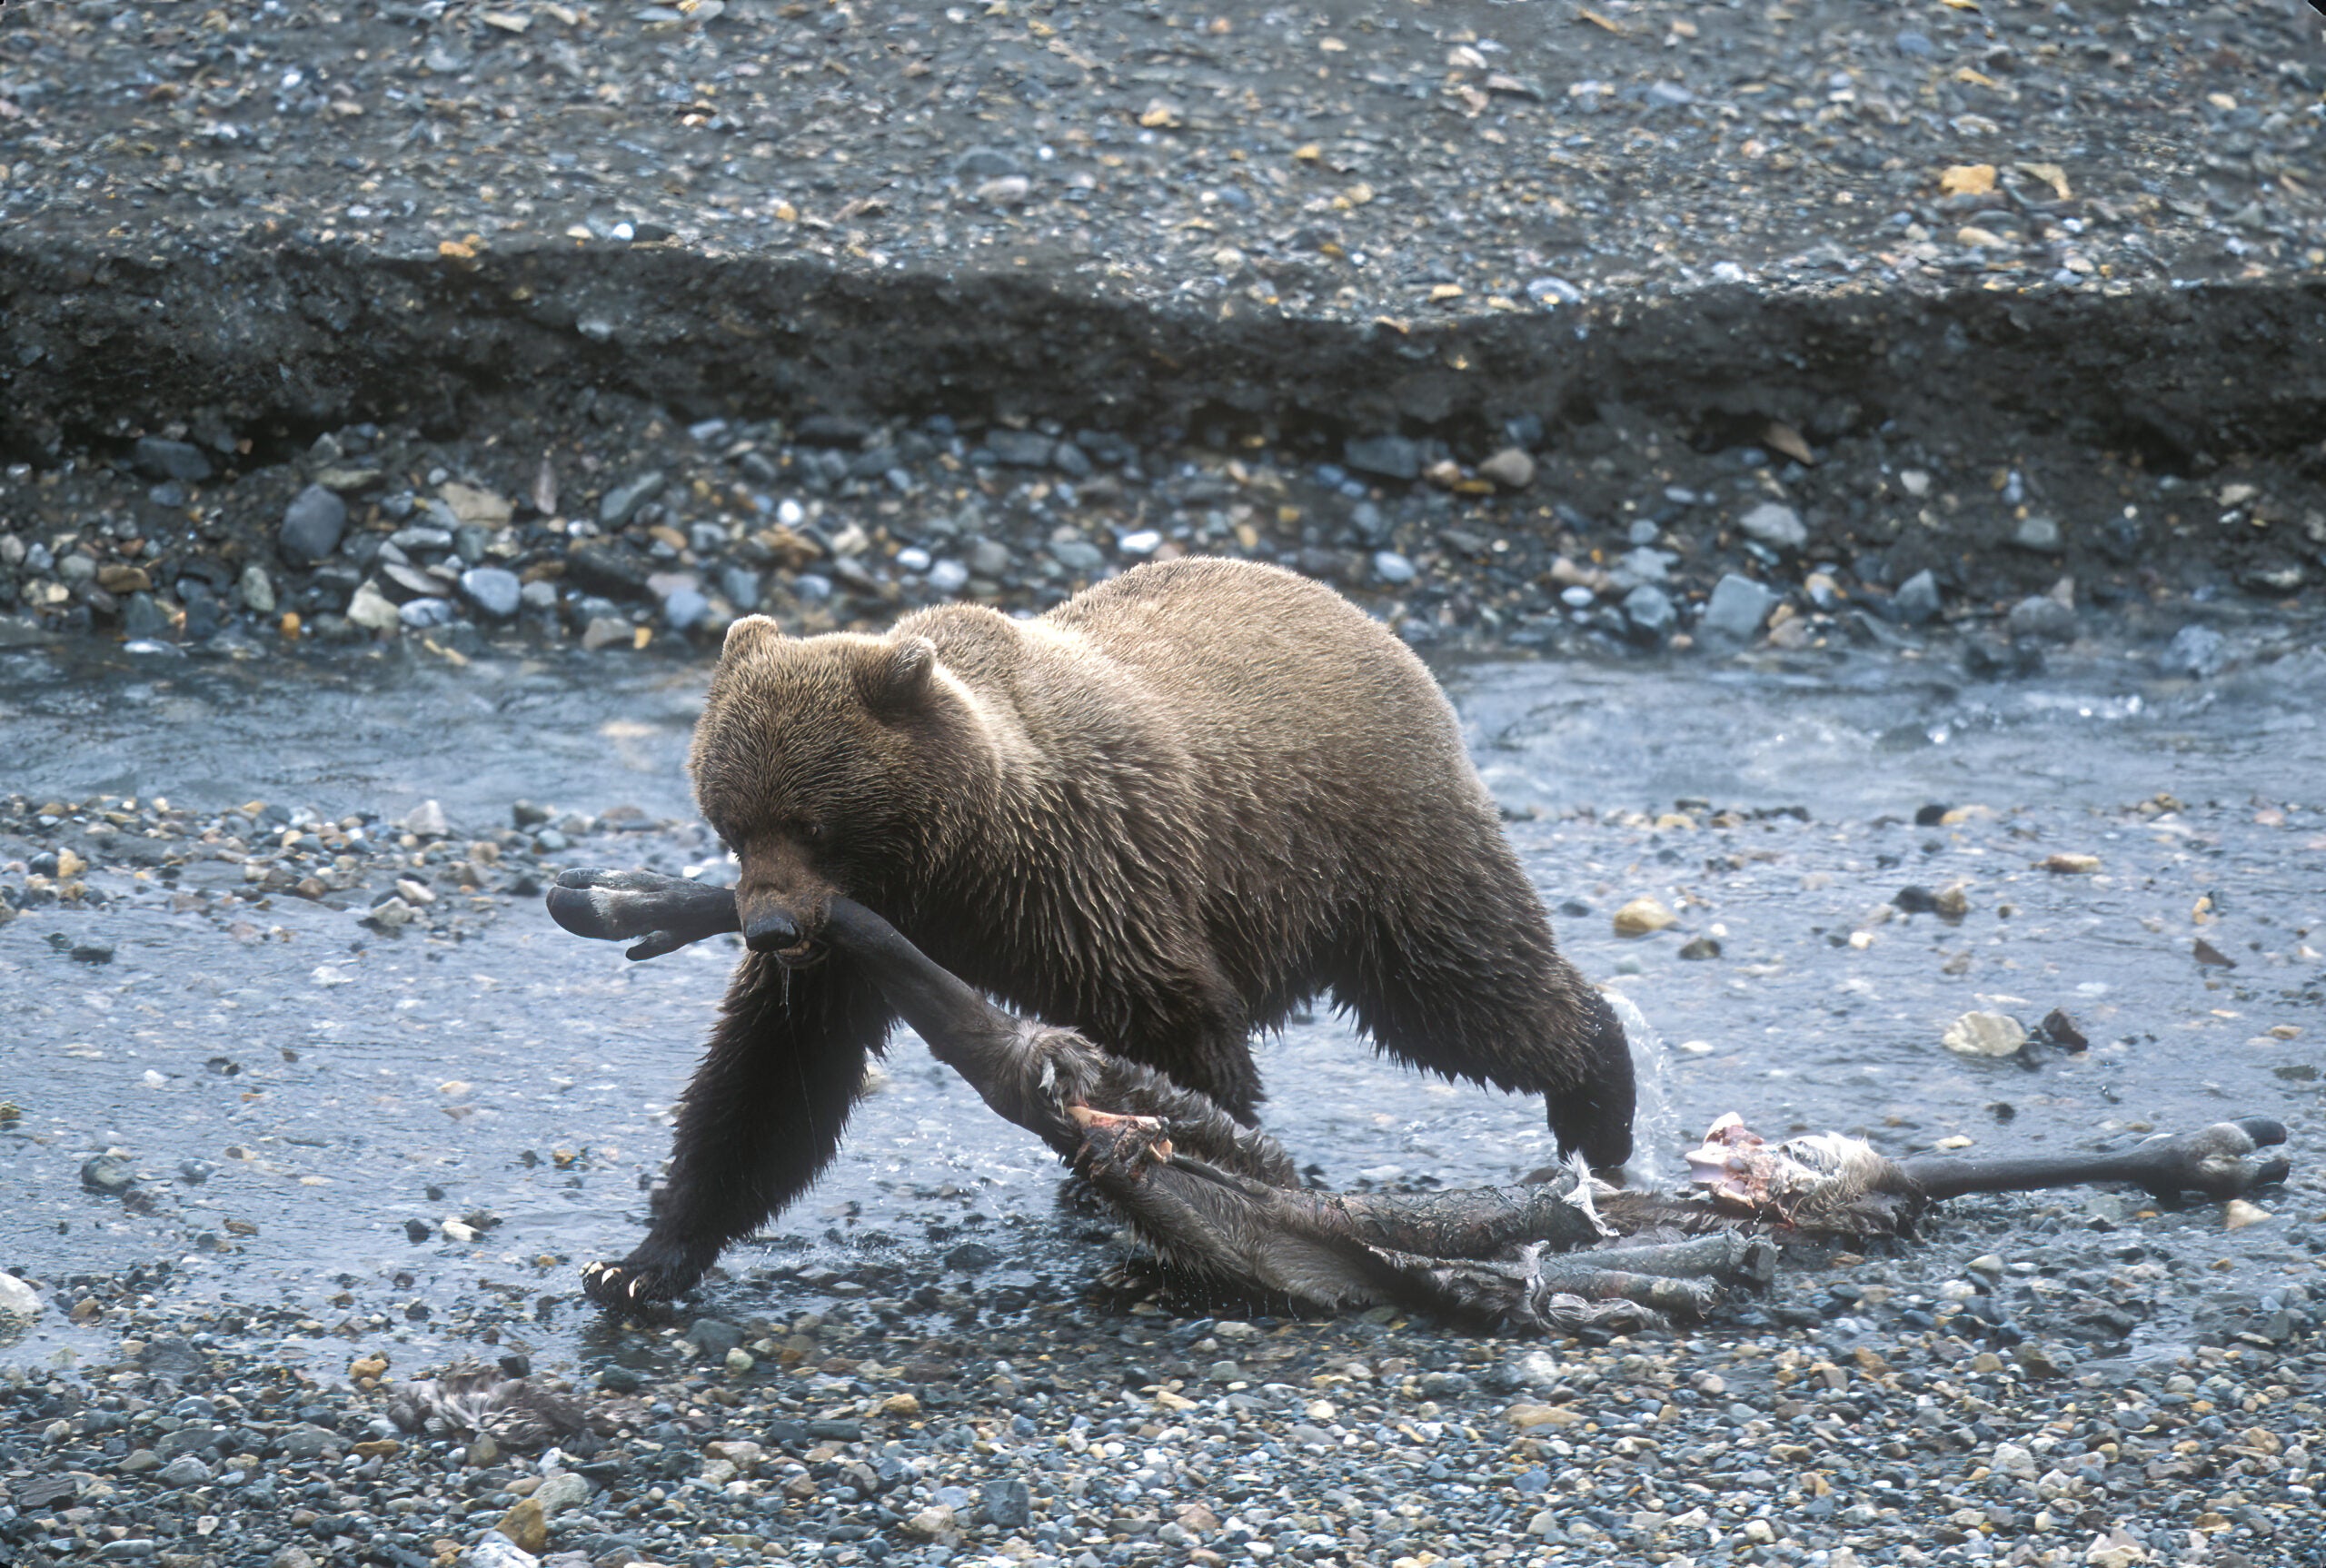 Bear Conservation photo